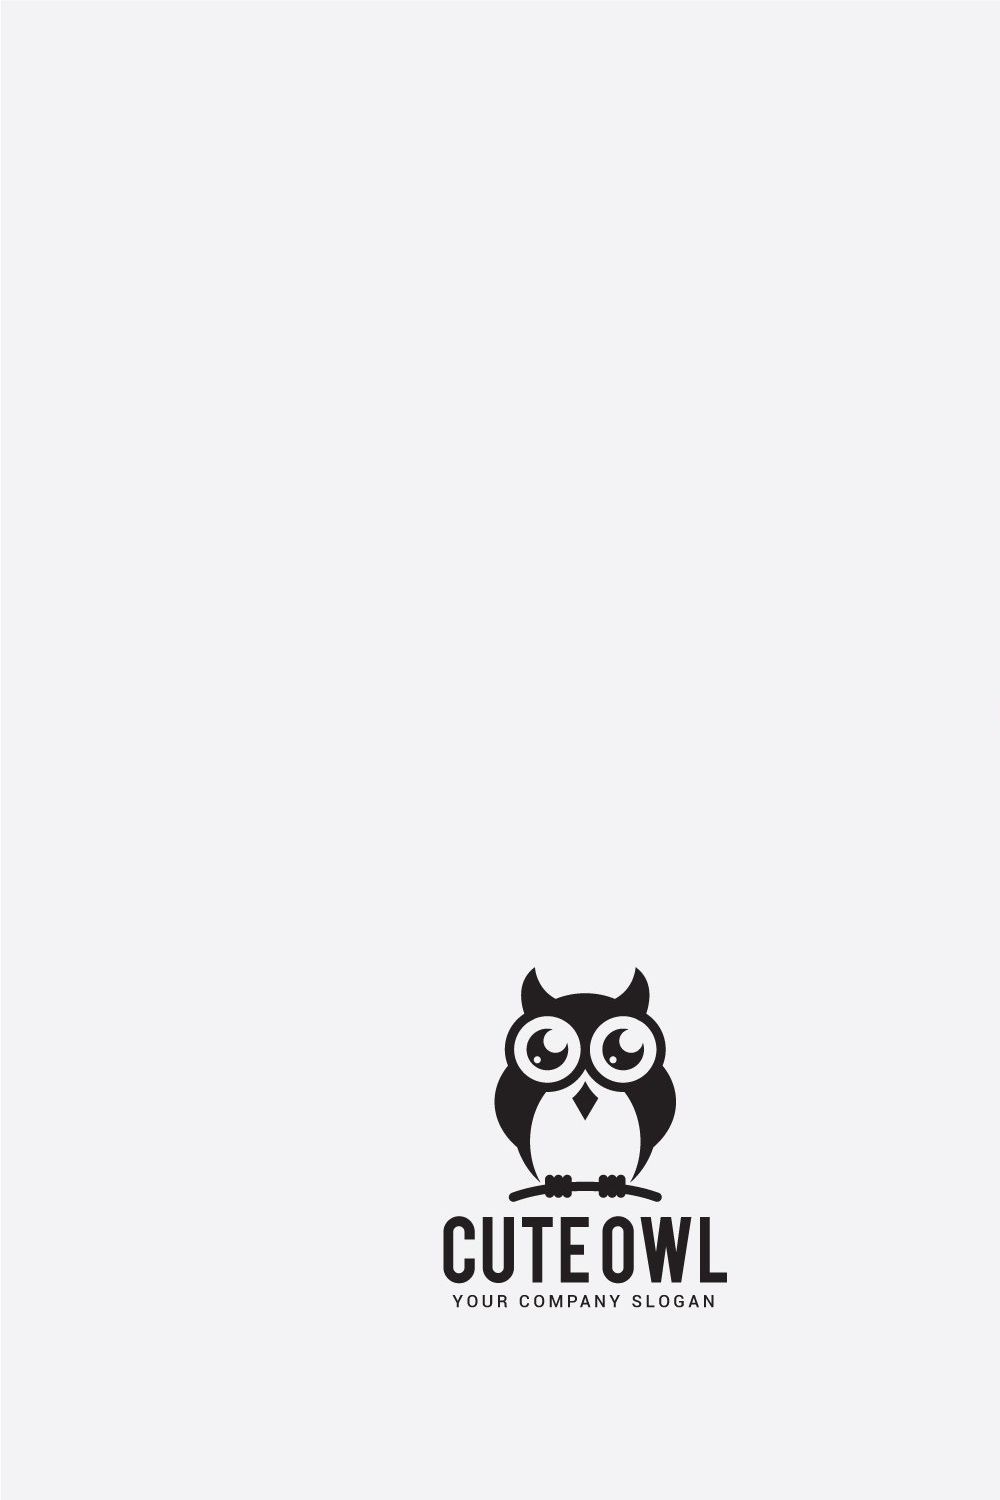 cute owl logo pinterest preview image.